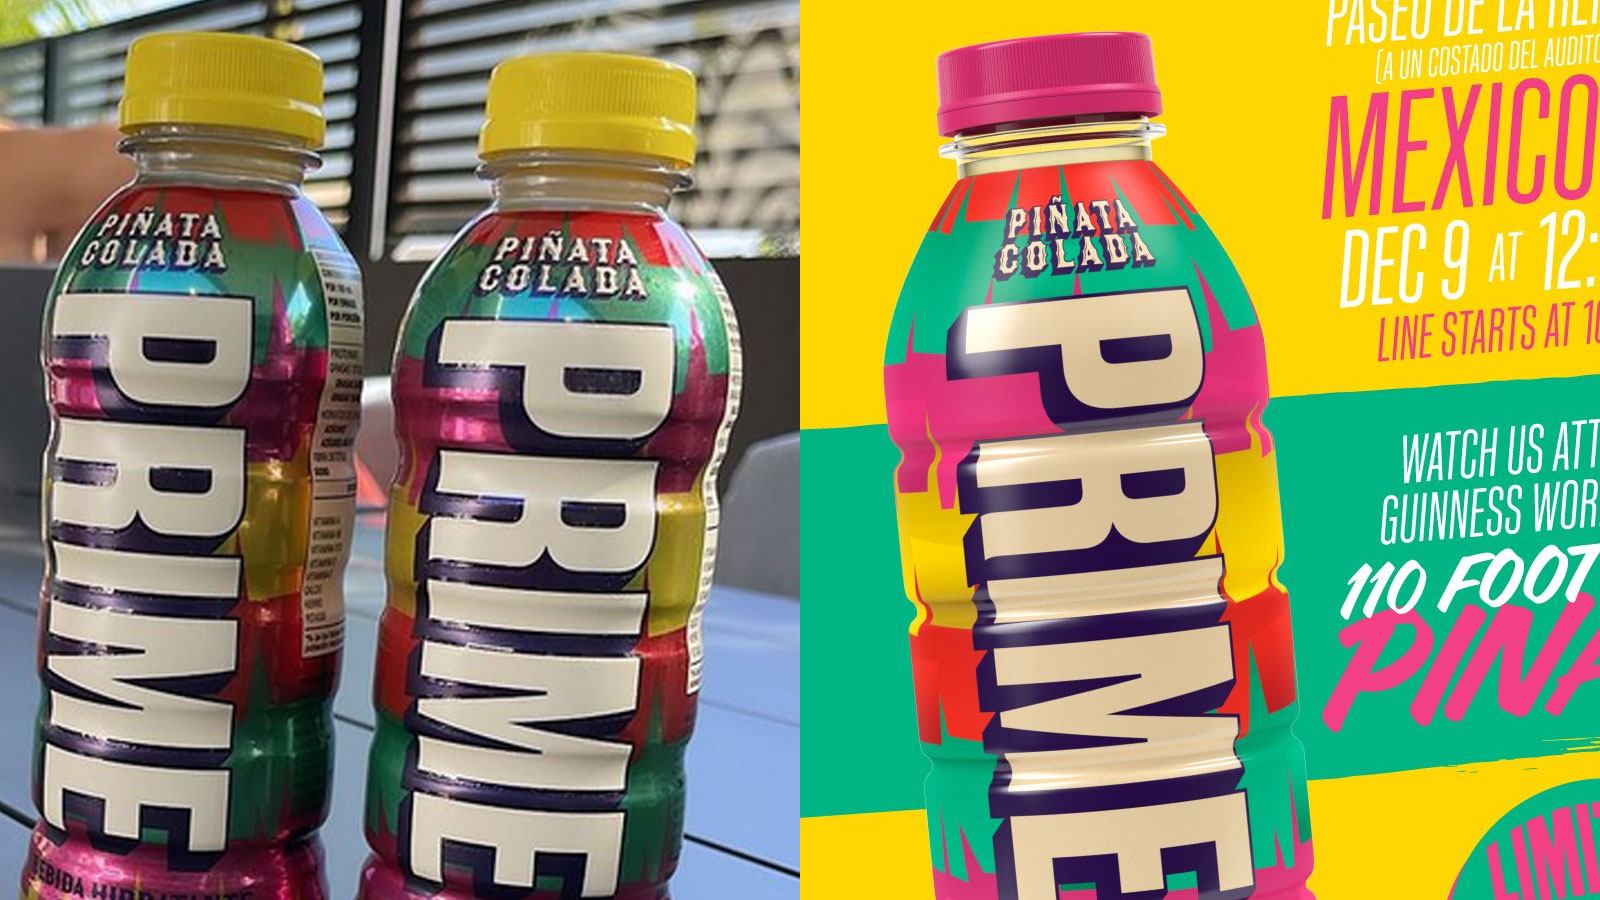 Prime reveals new limitededition Piñata Colada flavor to celebrate